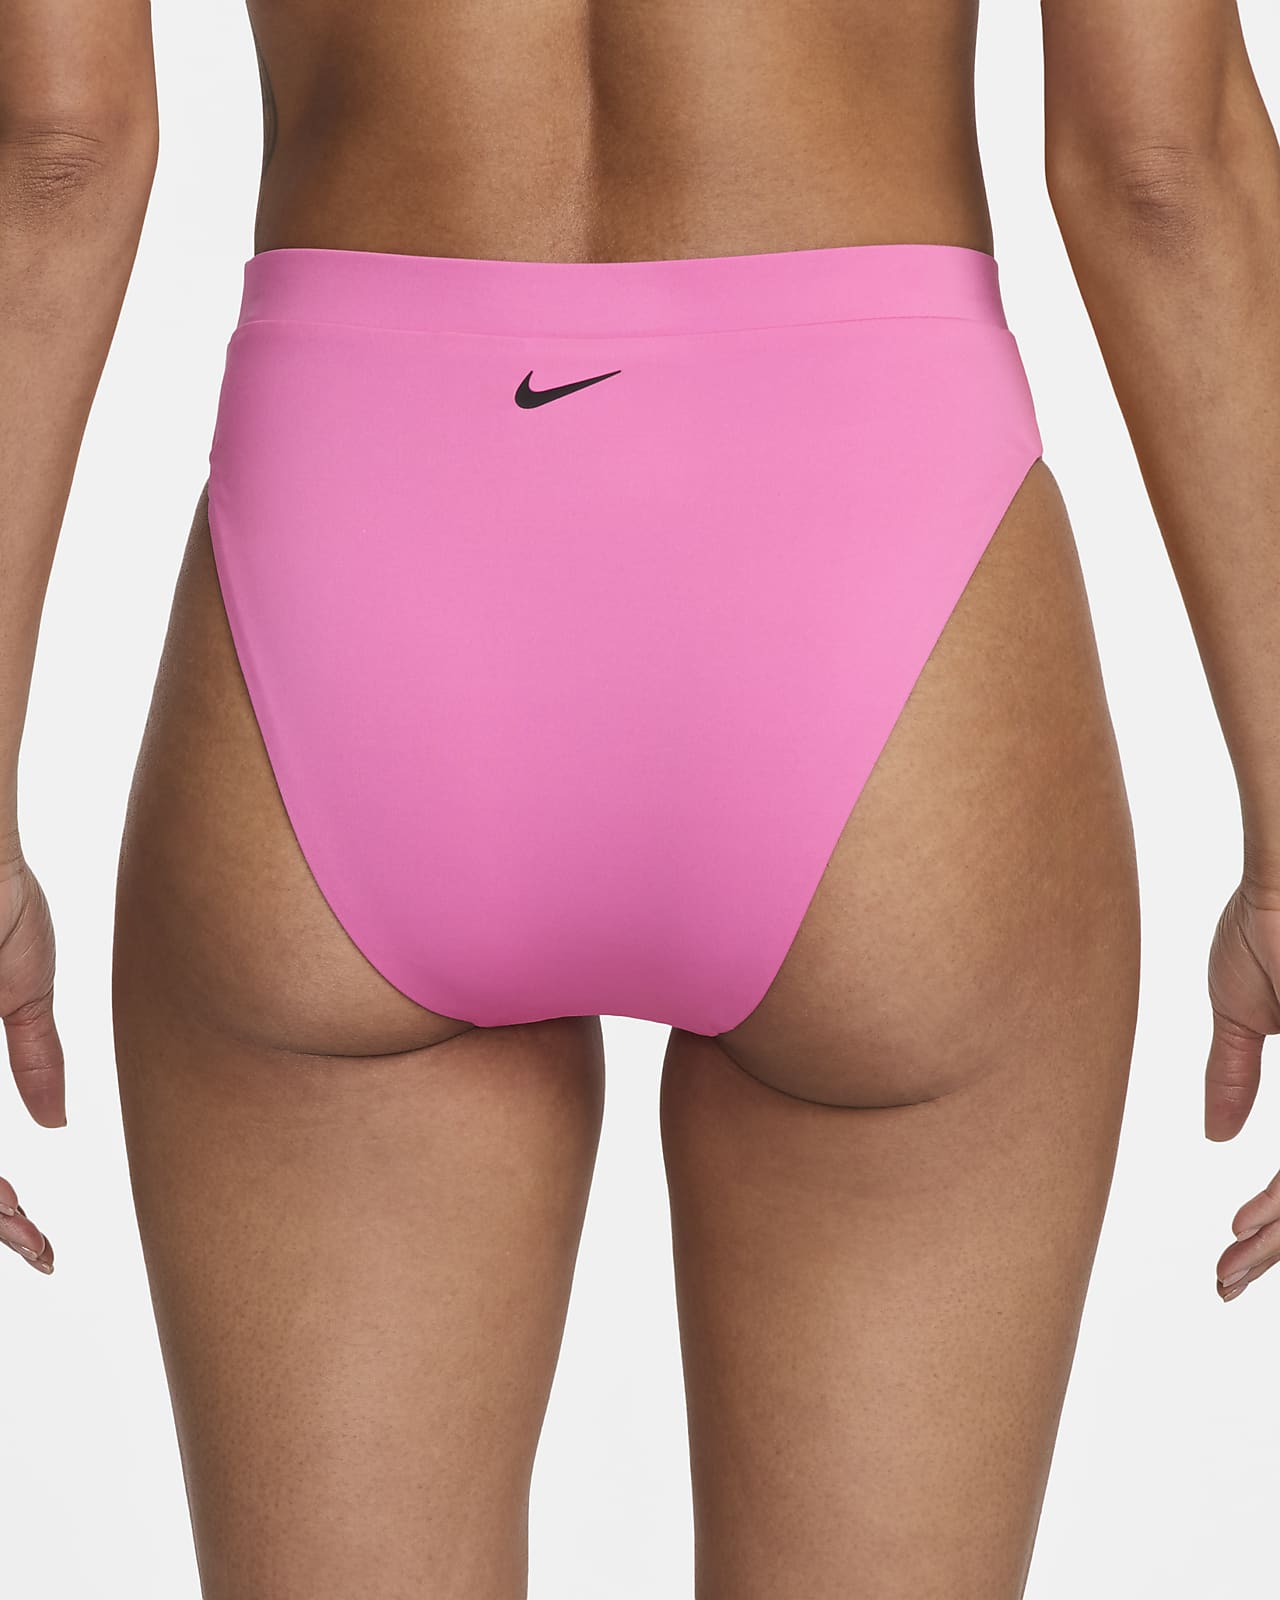  Womens Coral Pink High Waisted Bikini Bottom Tummy